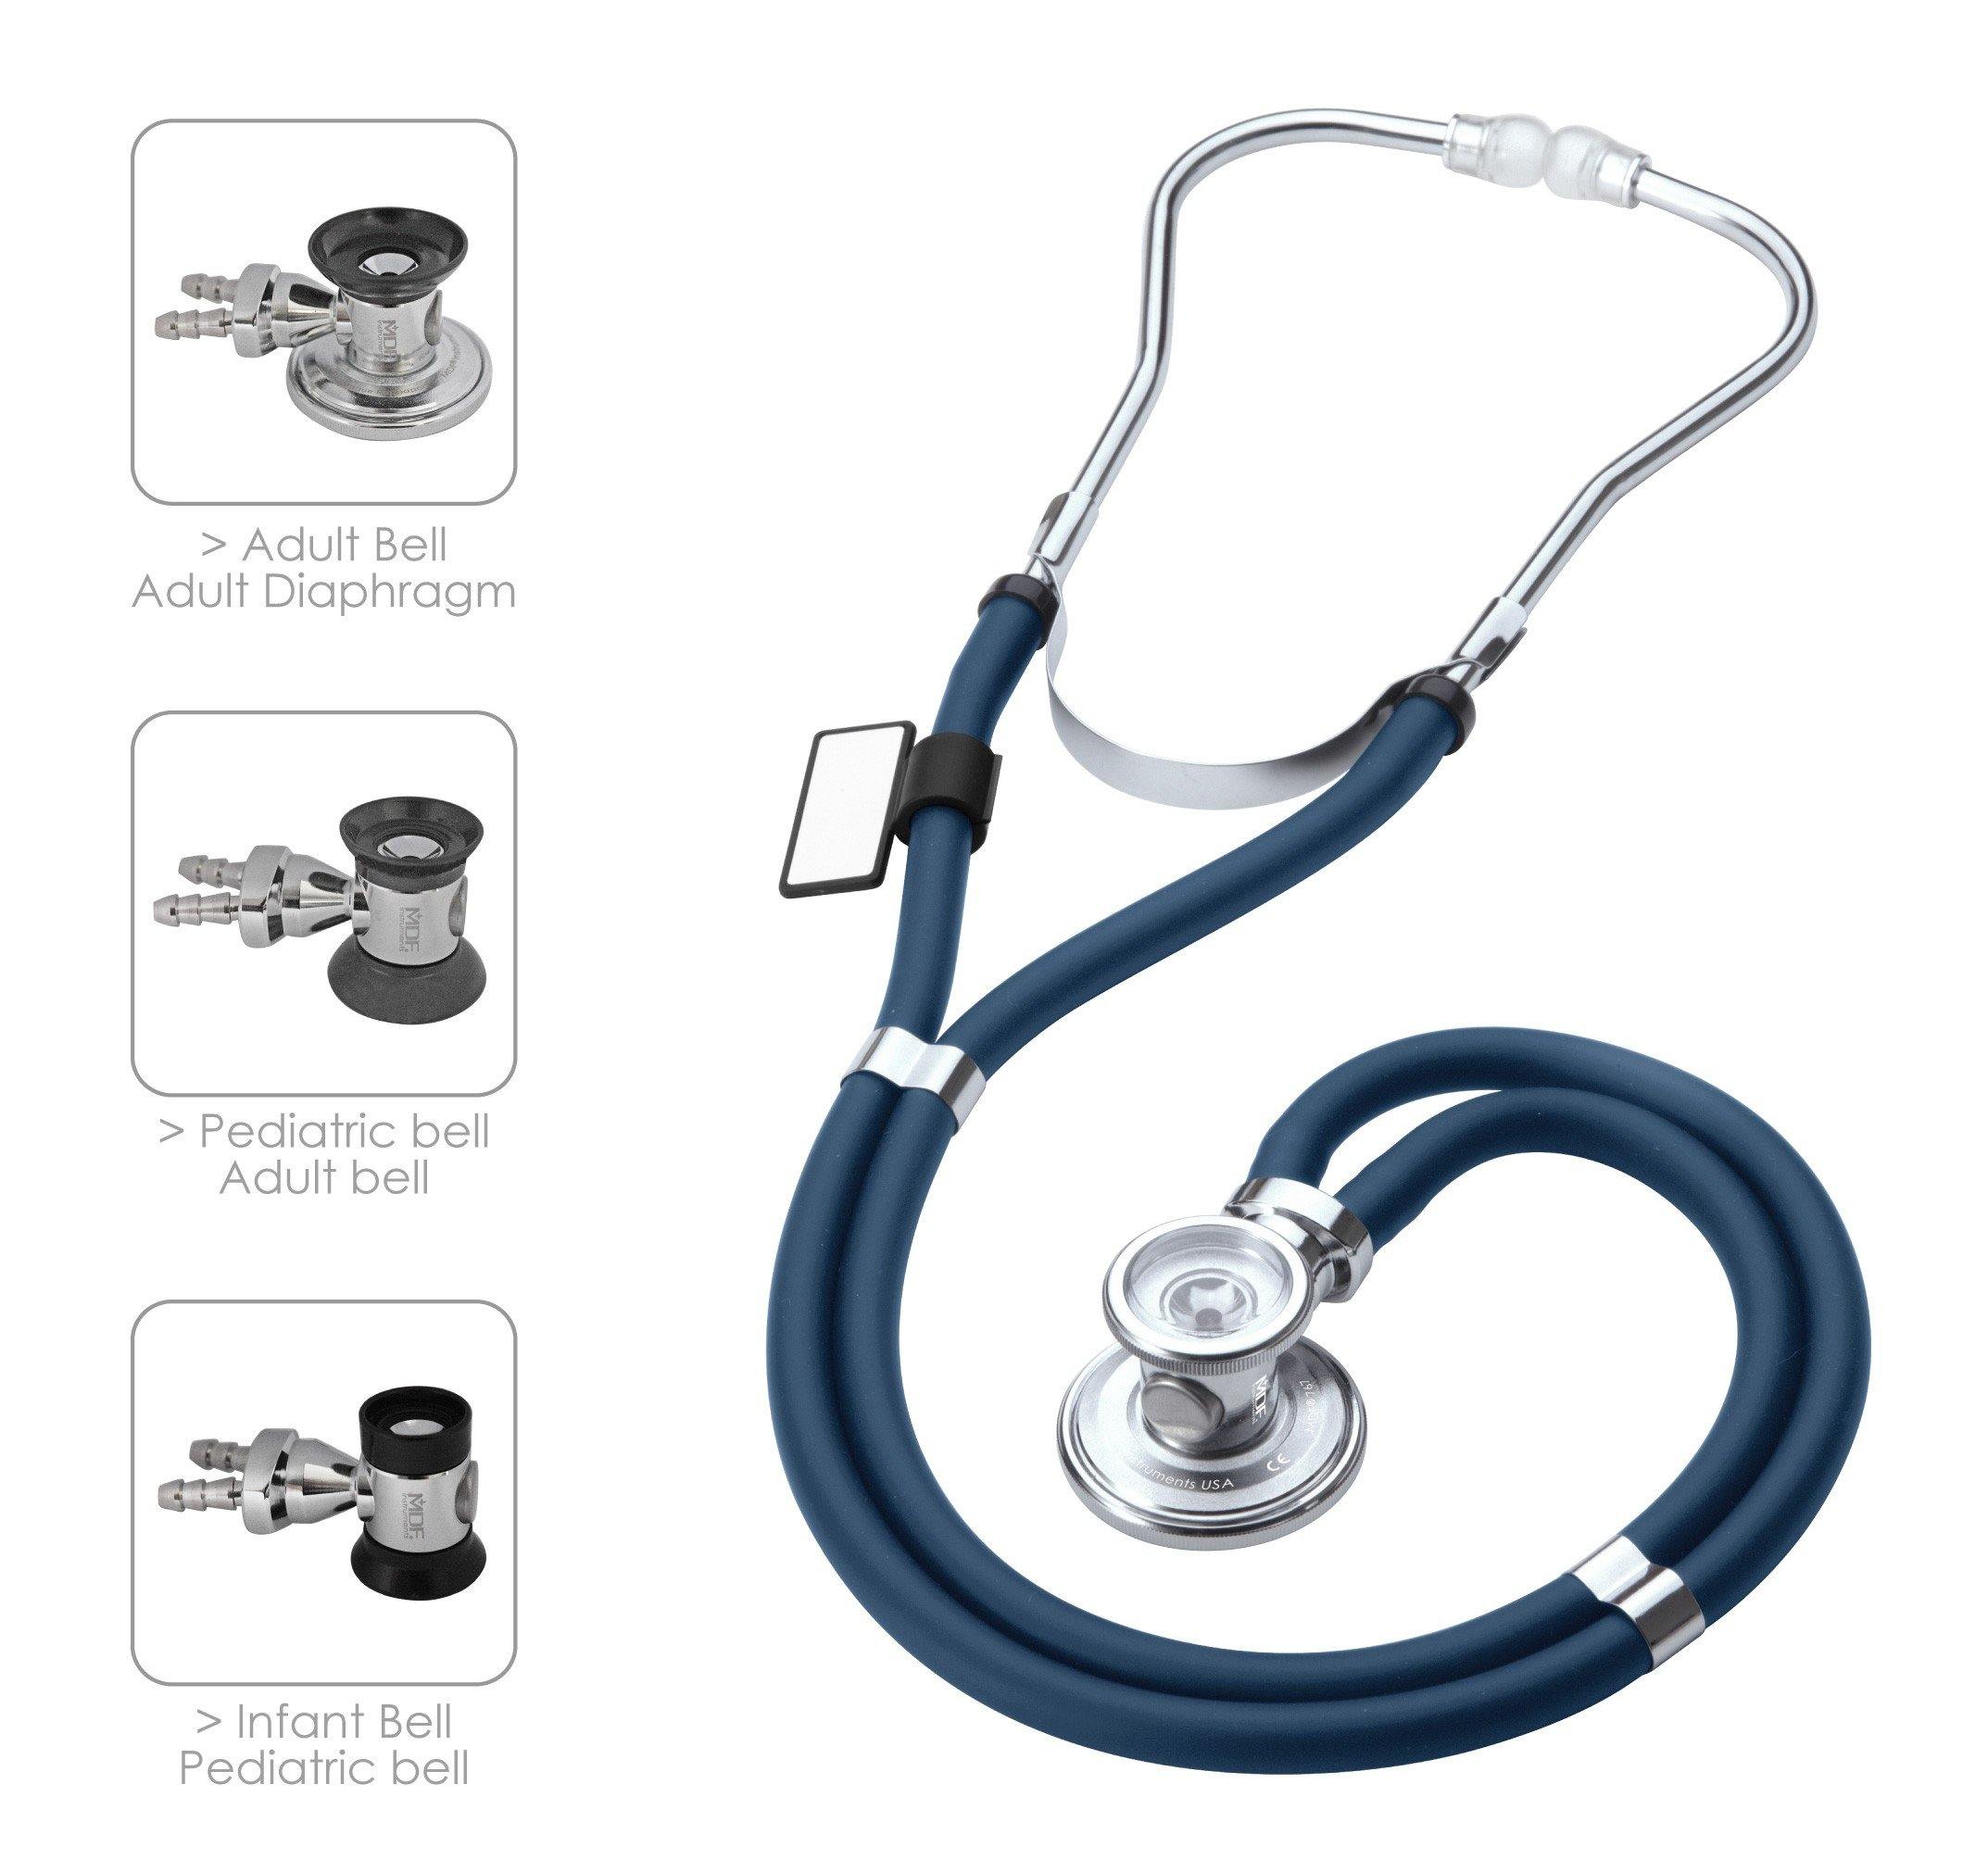 MDF® Instruments Sprague Rappaport Red Stethoscope